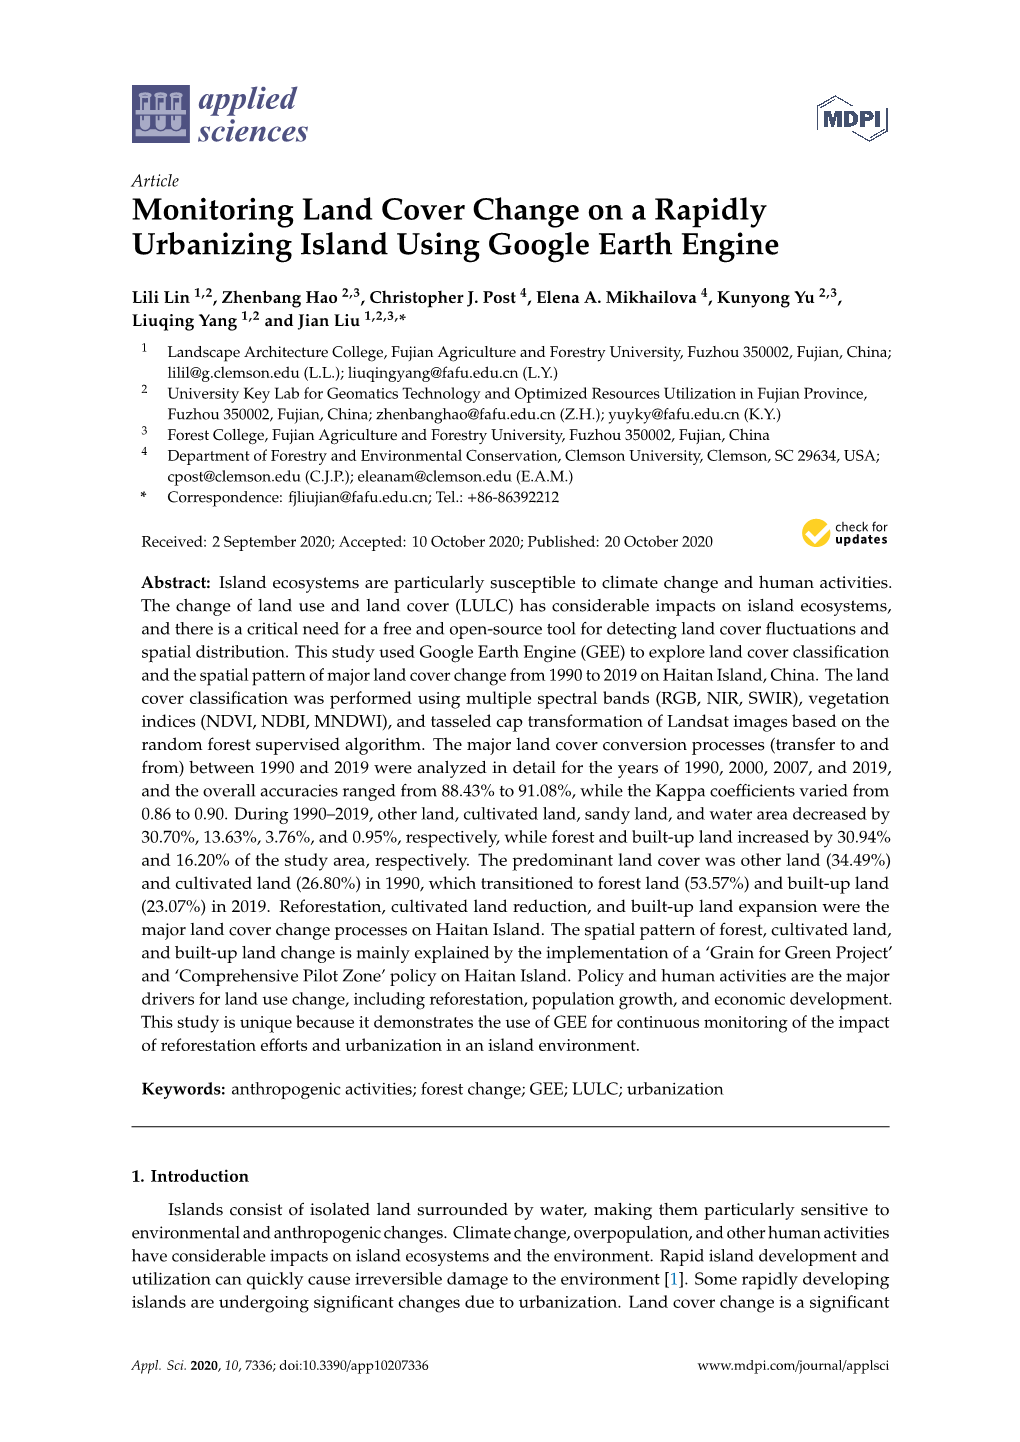 Monitoring Land Cover Change on a Rapidly Urbanizing Island Using Google Earth Engine